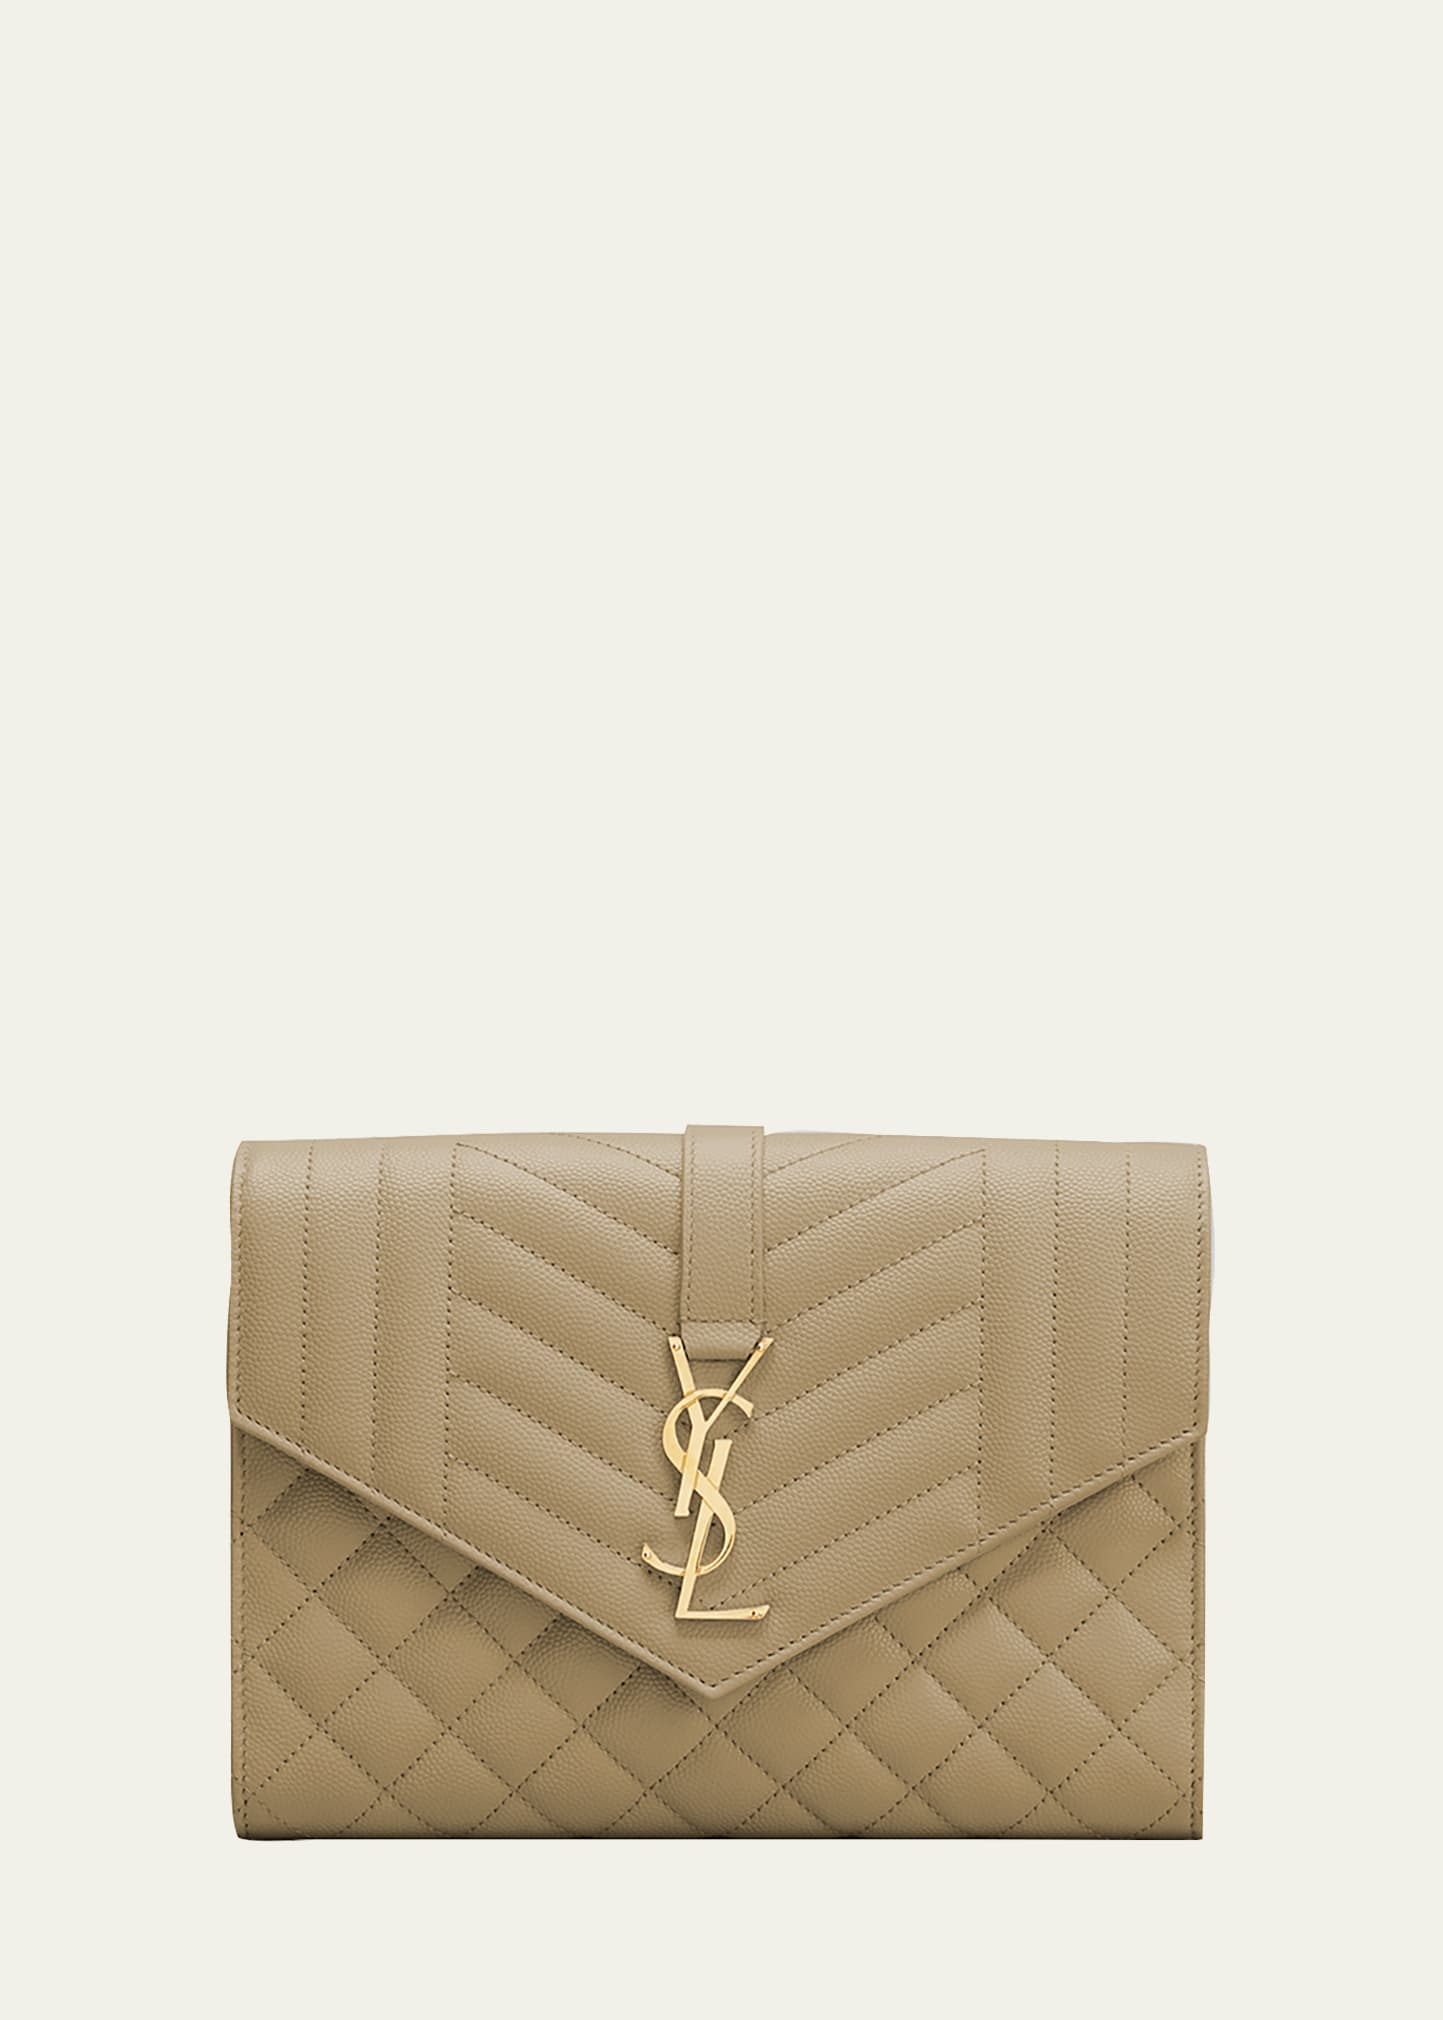 Saint Laurent Ysl Monogram Quilted Envelope Clutch Bag In Vert Kaki